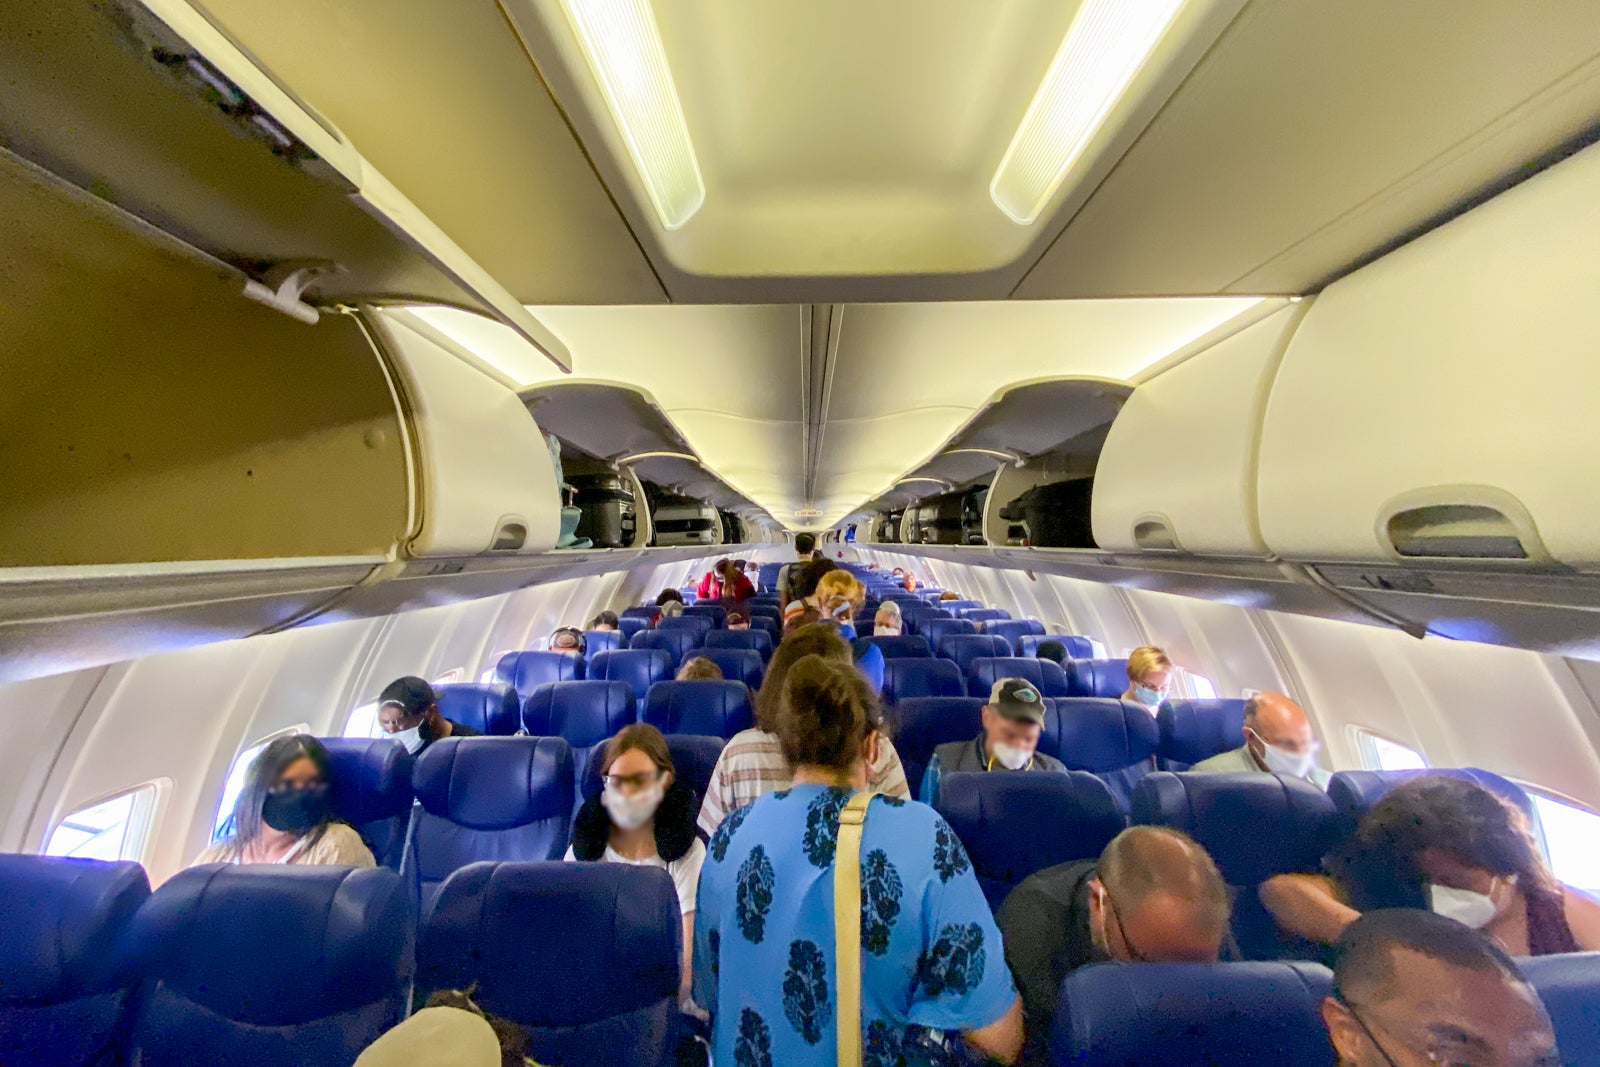 20200622_Pandemic SW_Boarding in the plane_AKunesh